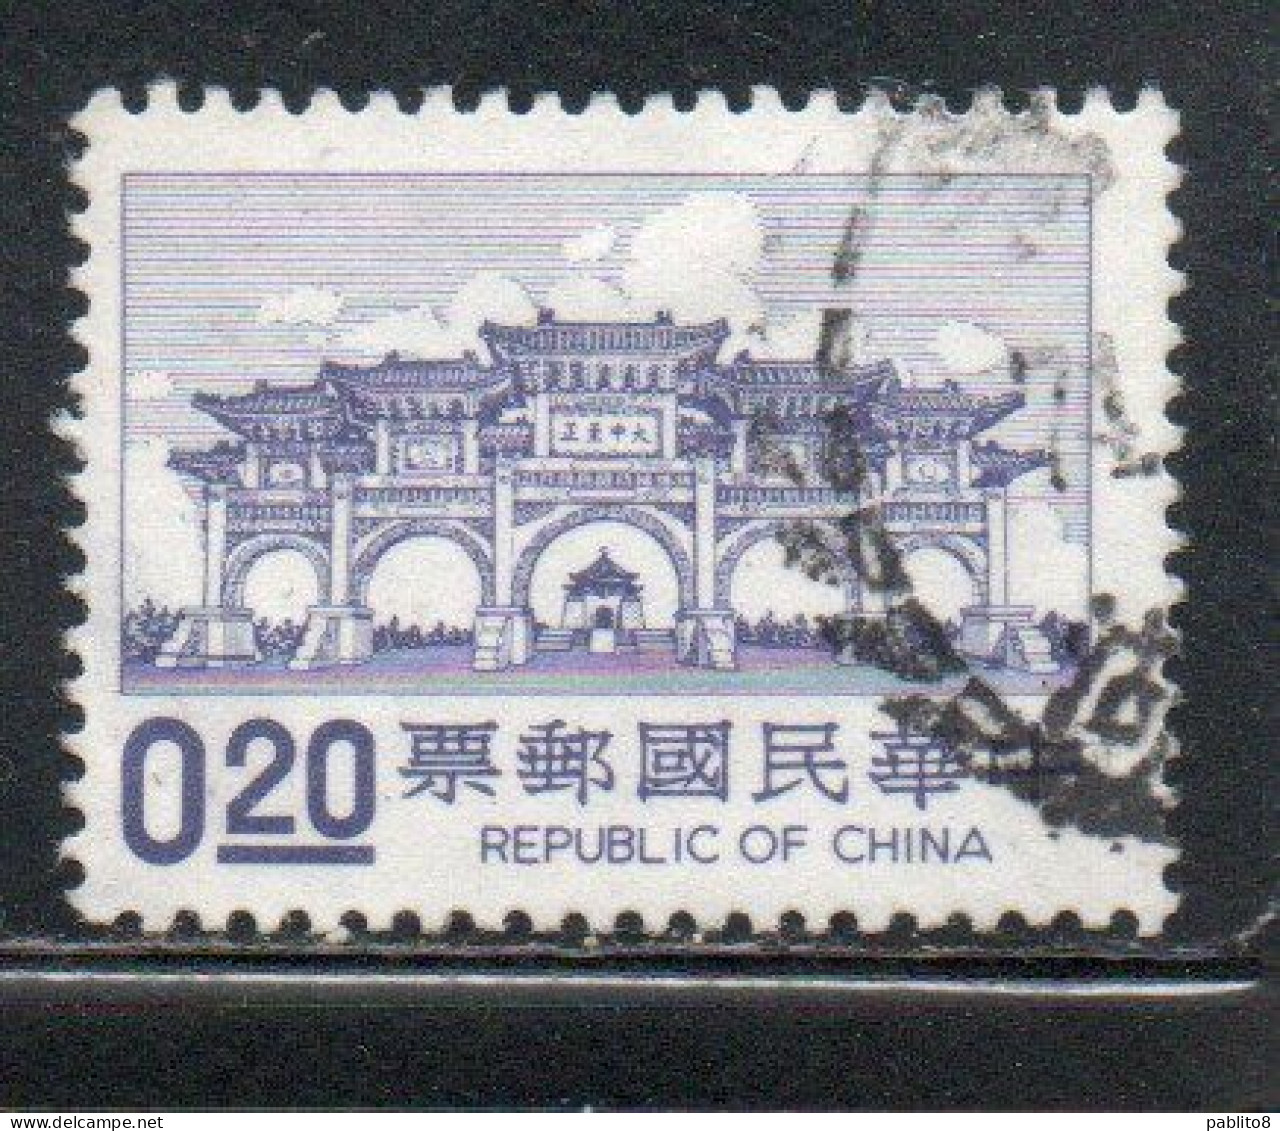 CHINA REPUBLIC CINA TAIWAN FORMOSA 1981 CHIANG KAI-SHEH MEMORIAL HALL 20c USED USATO OBLITERE' - Gebruikt